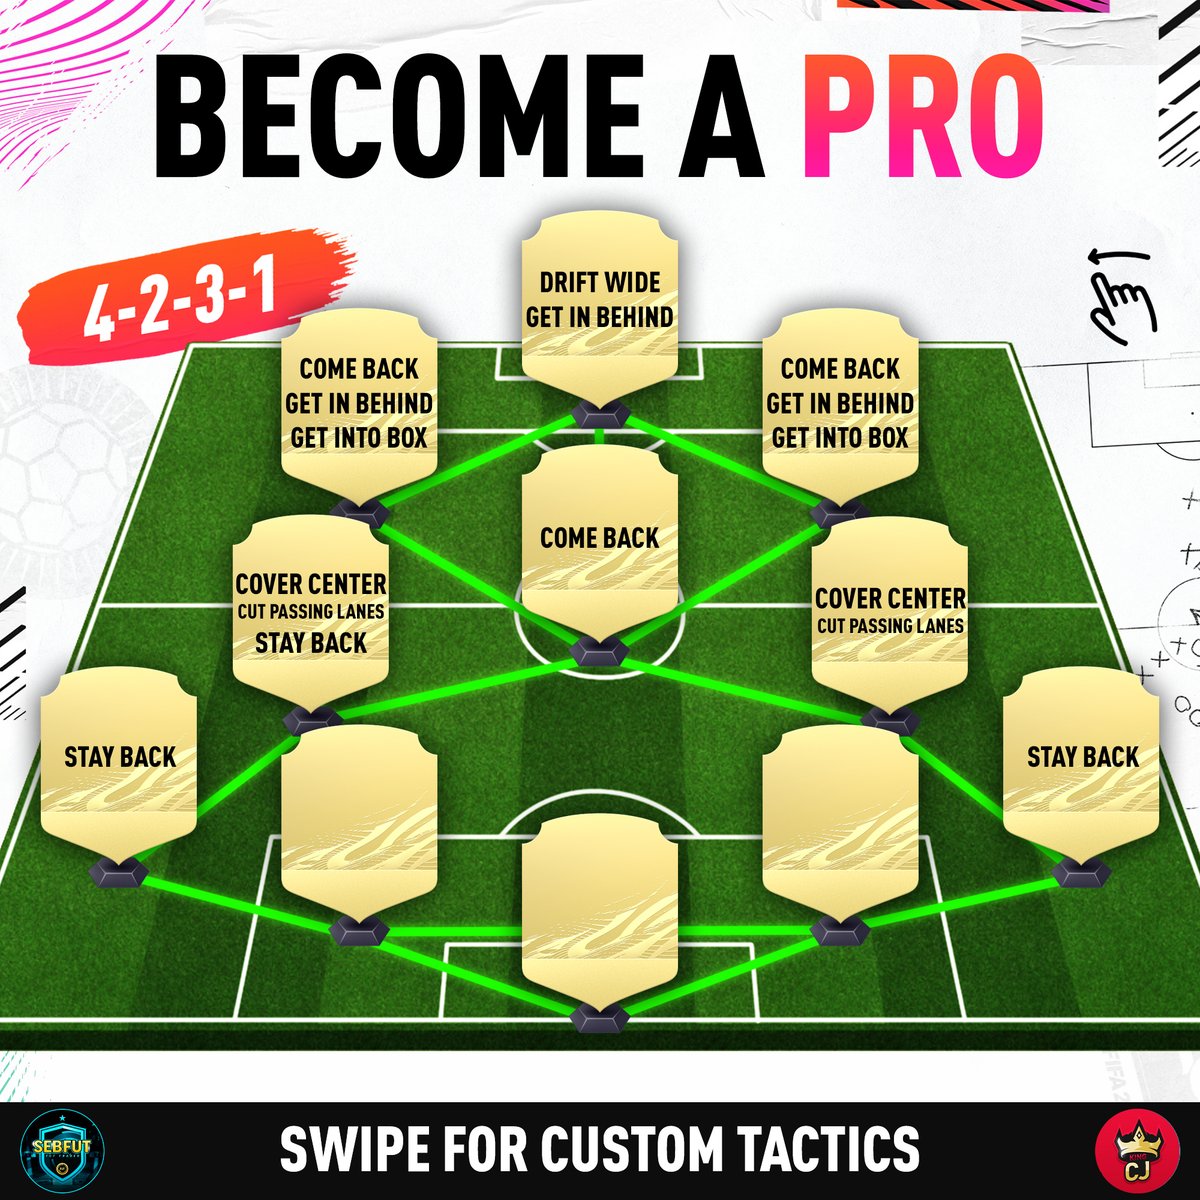 Sebfut 4231 Custom Tactics And Instructions In Fifa21 Collab With Kingcj0